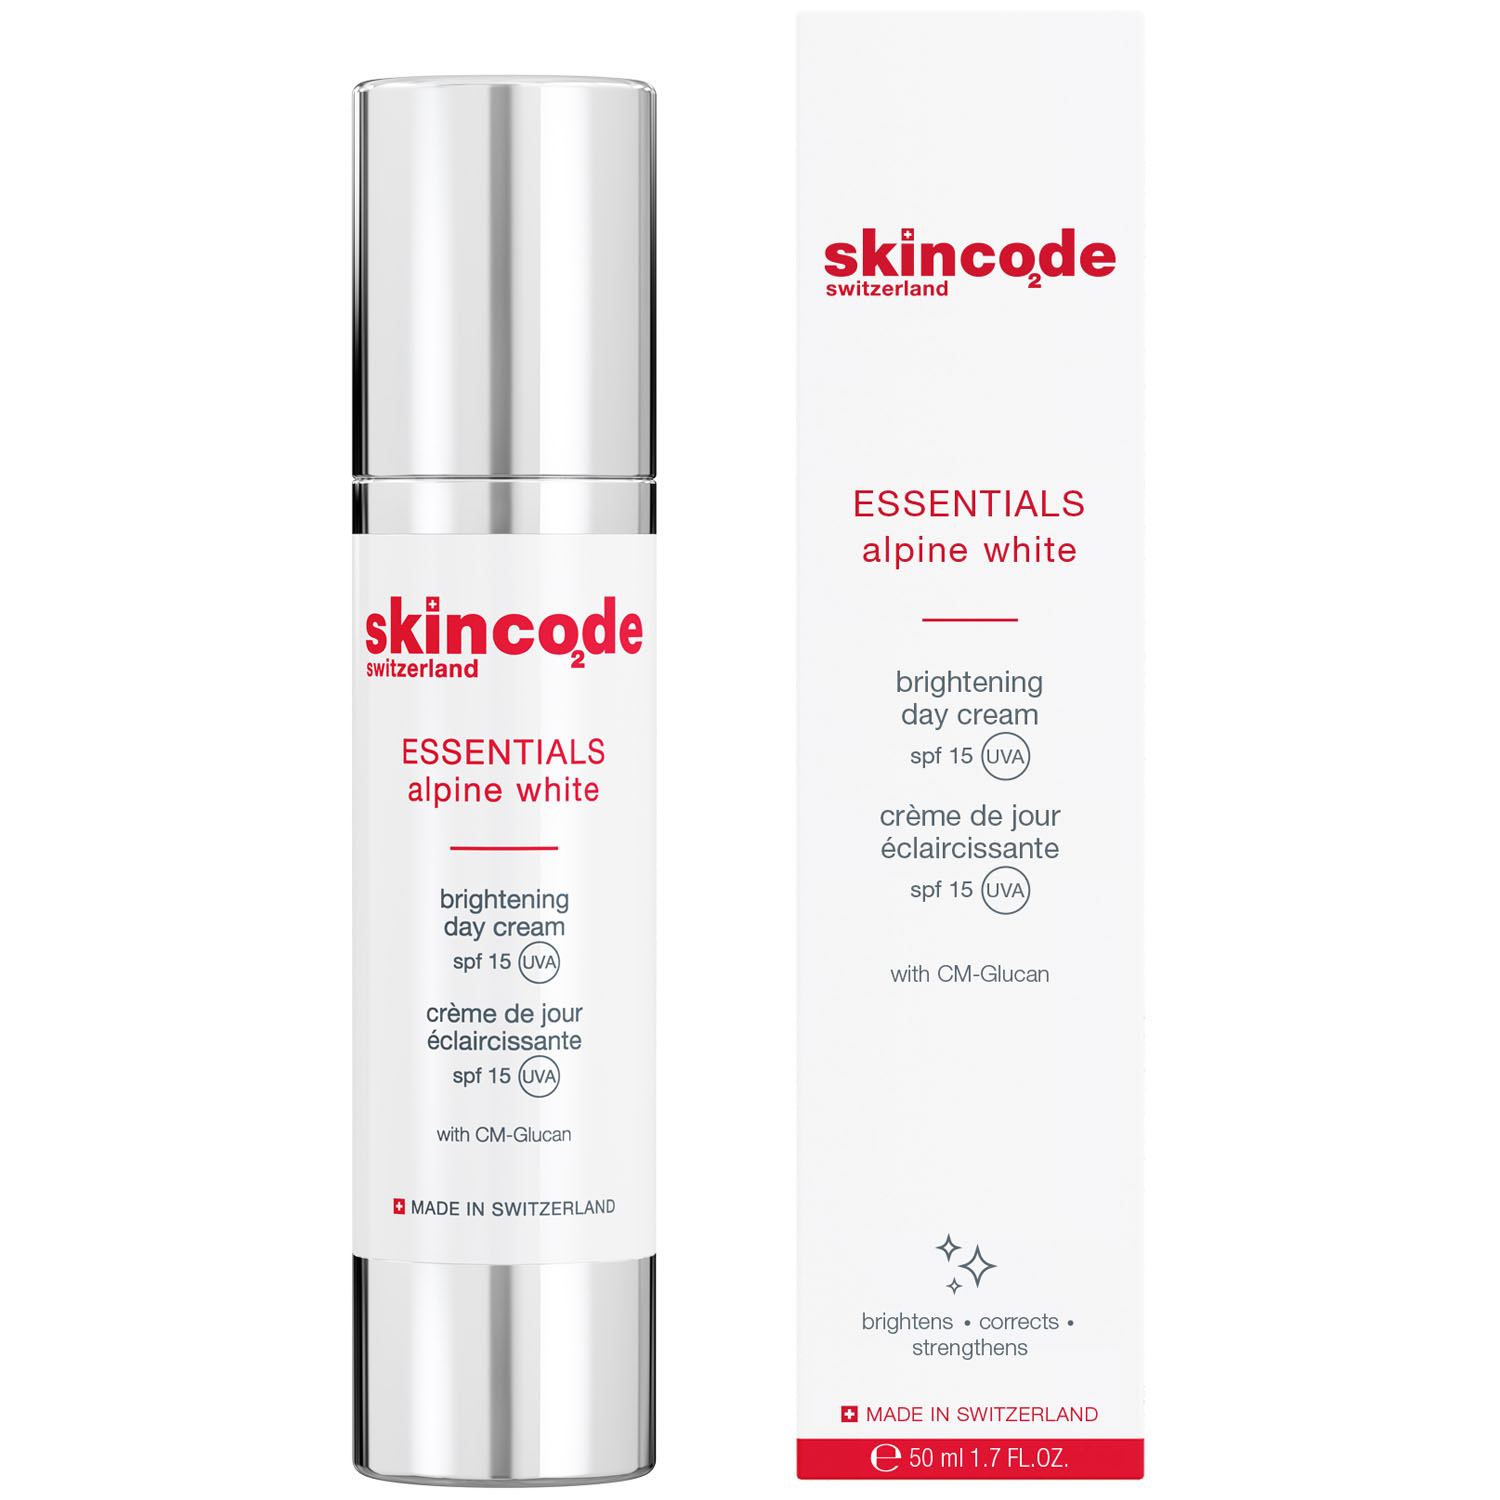 Skincode Осветляющий дневной крем SPF 15, 50 мл (Skincode, Essentials Alpine White) крем осветляющий дневной spf 15 skincode 50 мл